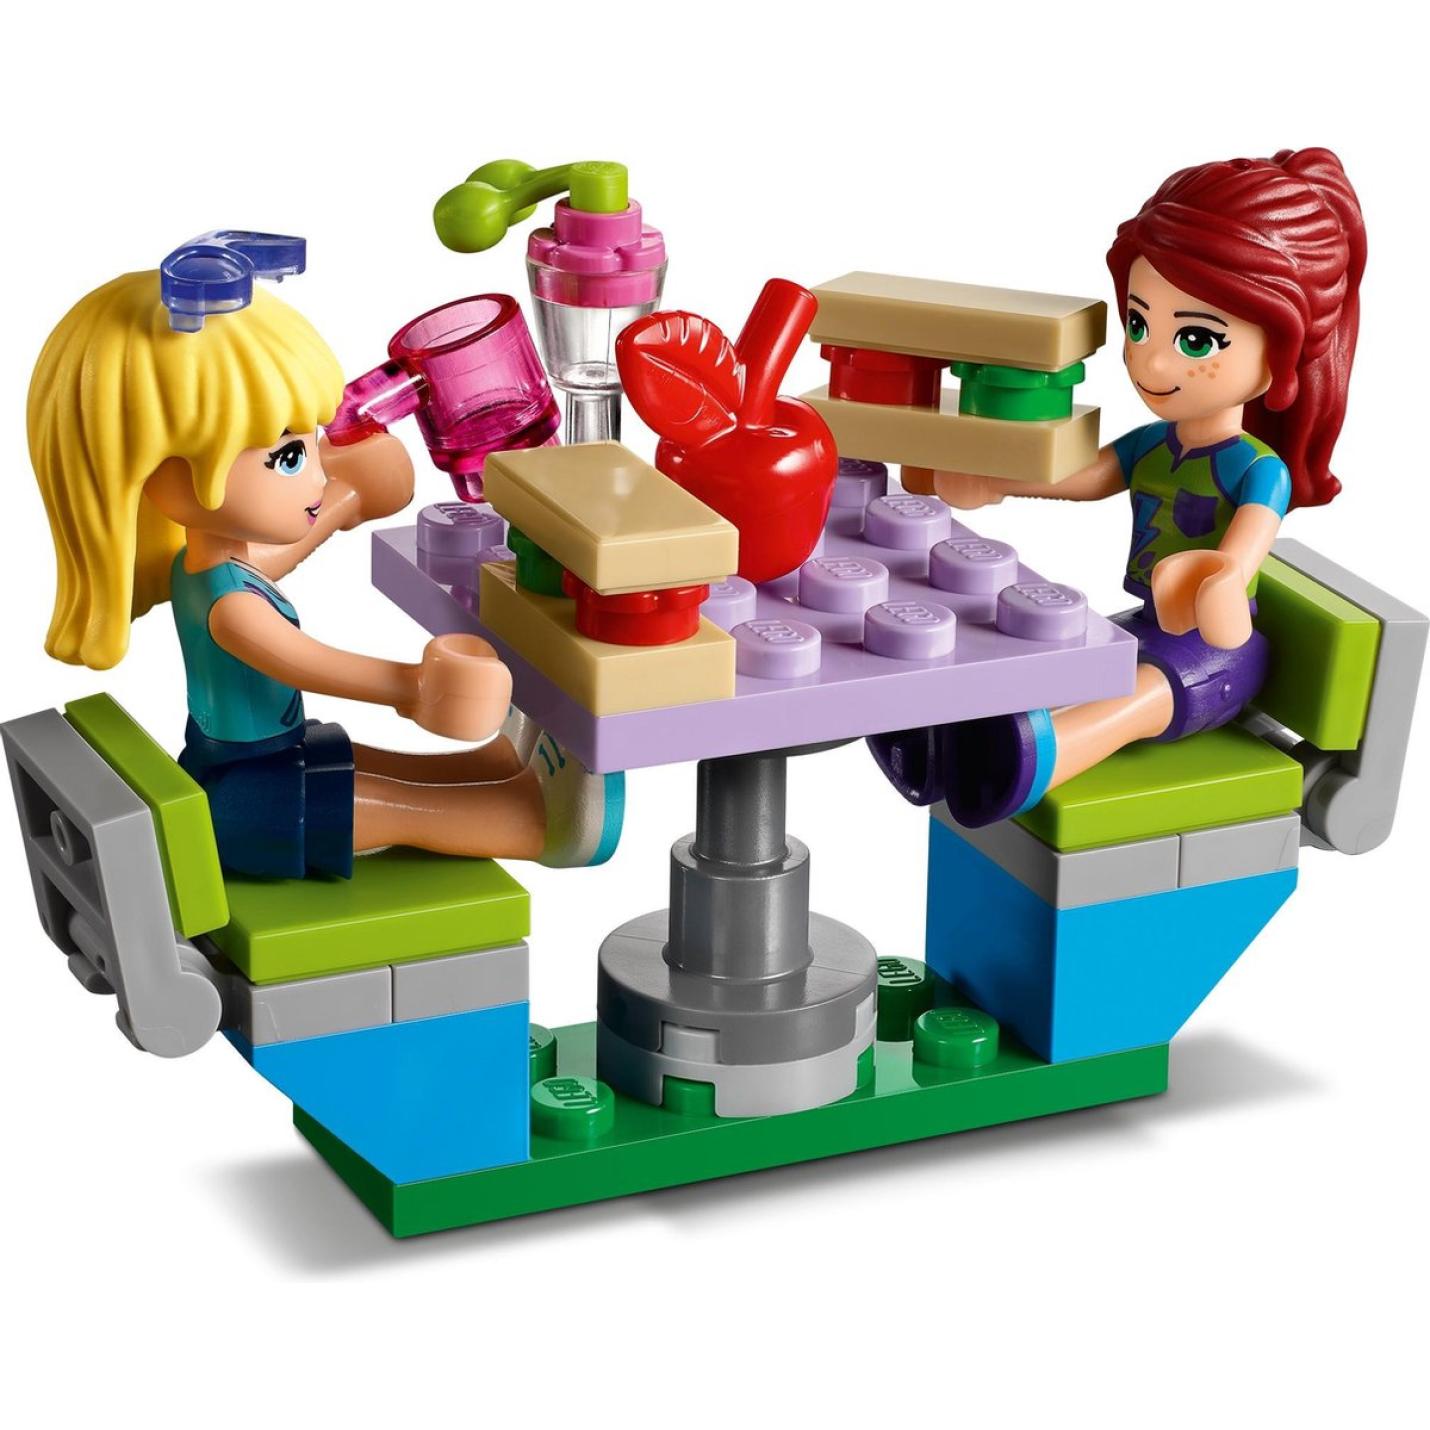 LEGO Friends Mia's Camper - 41339 17